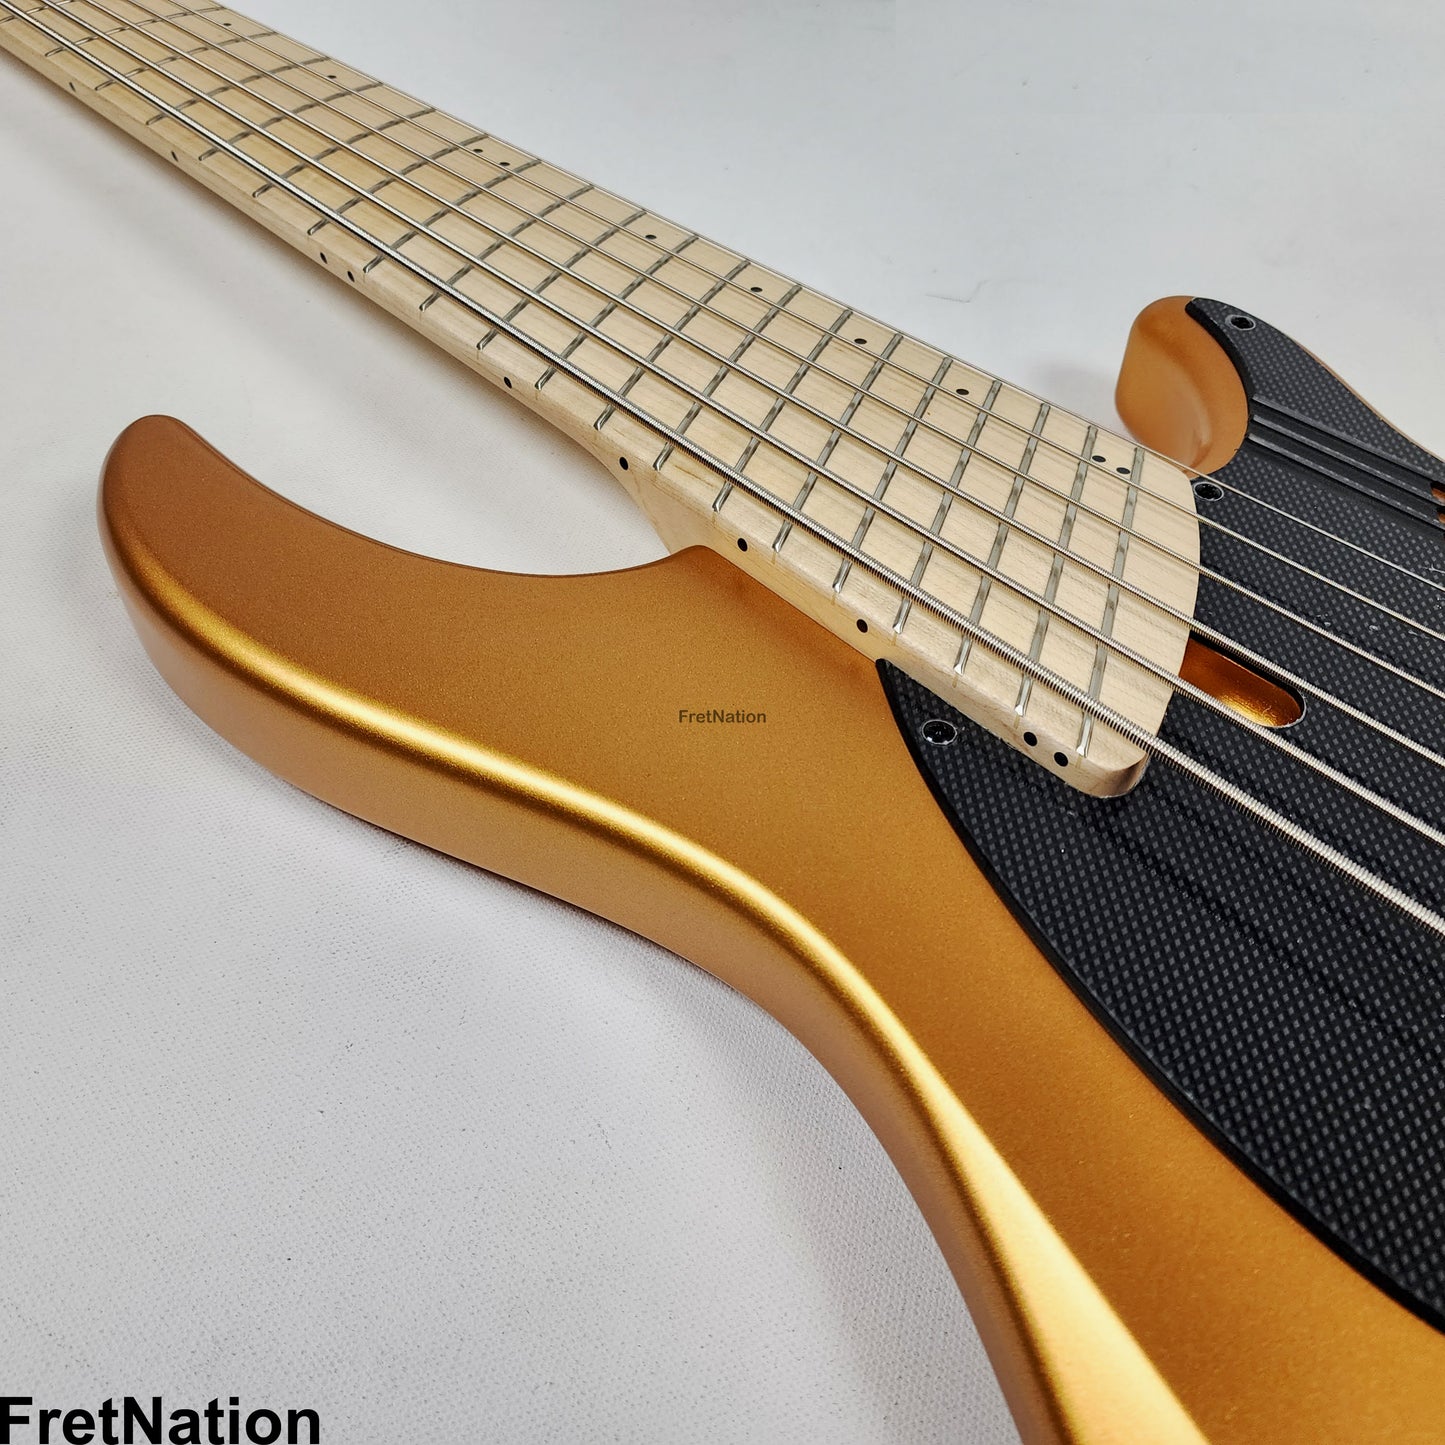 Dingwall Dingwall NG2 6-String Matte Gold Metallic Electric Bass w/ Bag 9.34lbs 14456